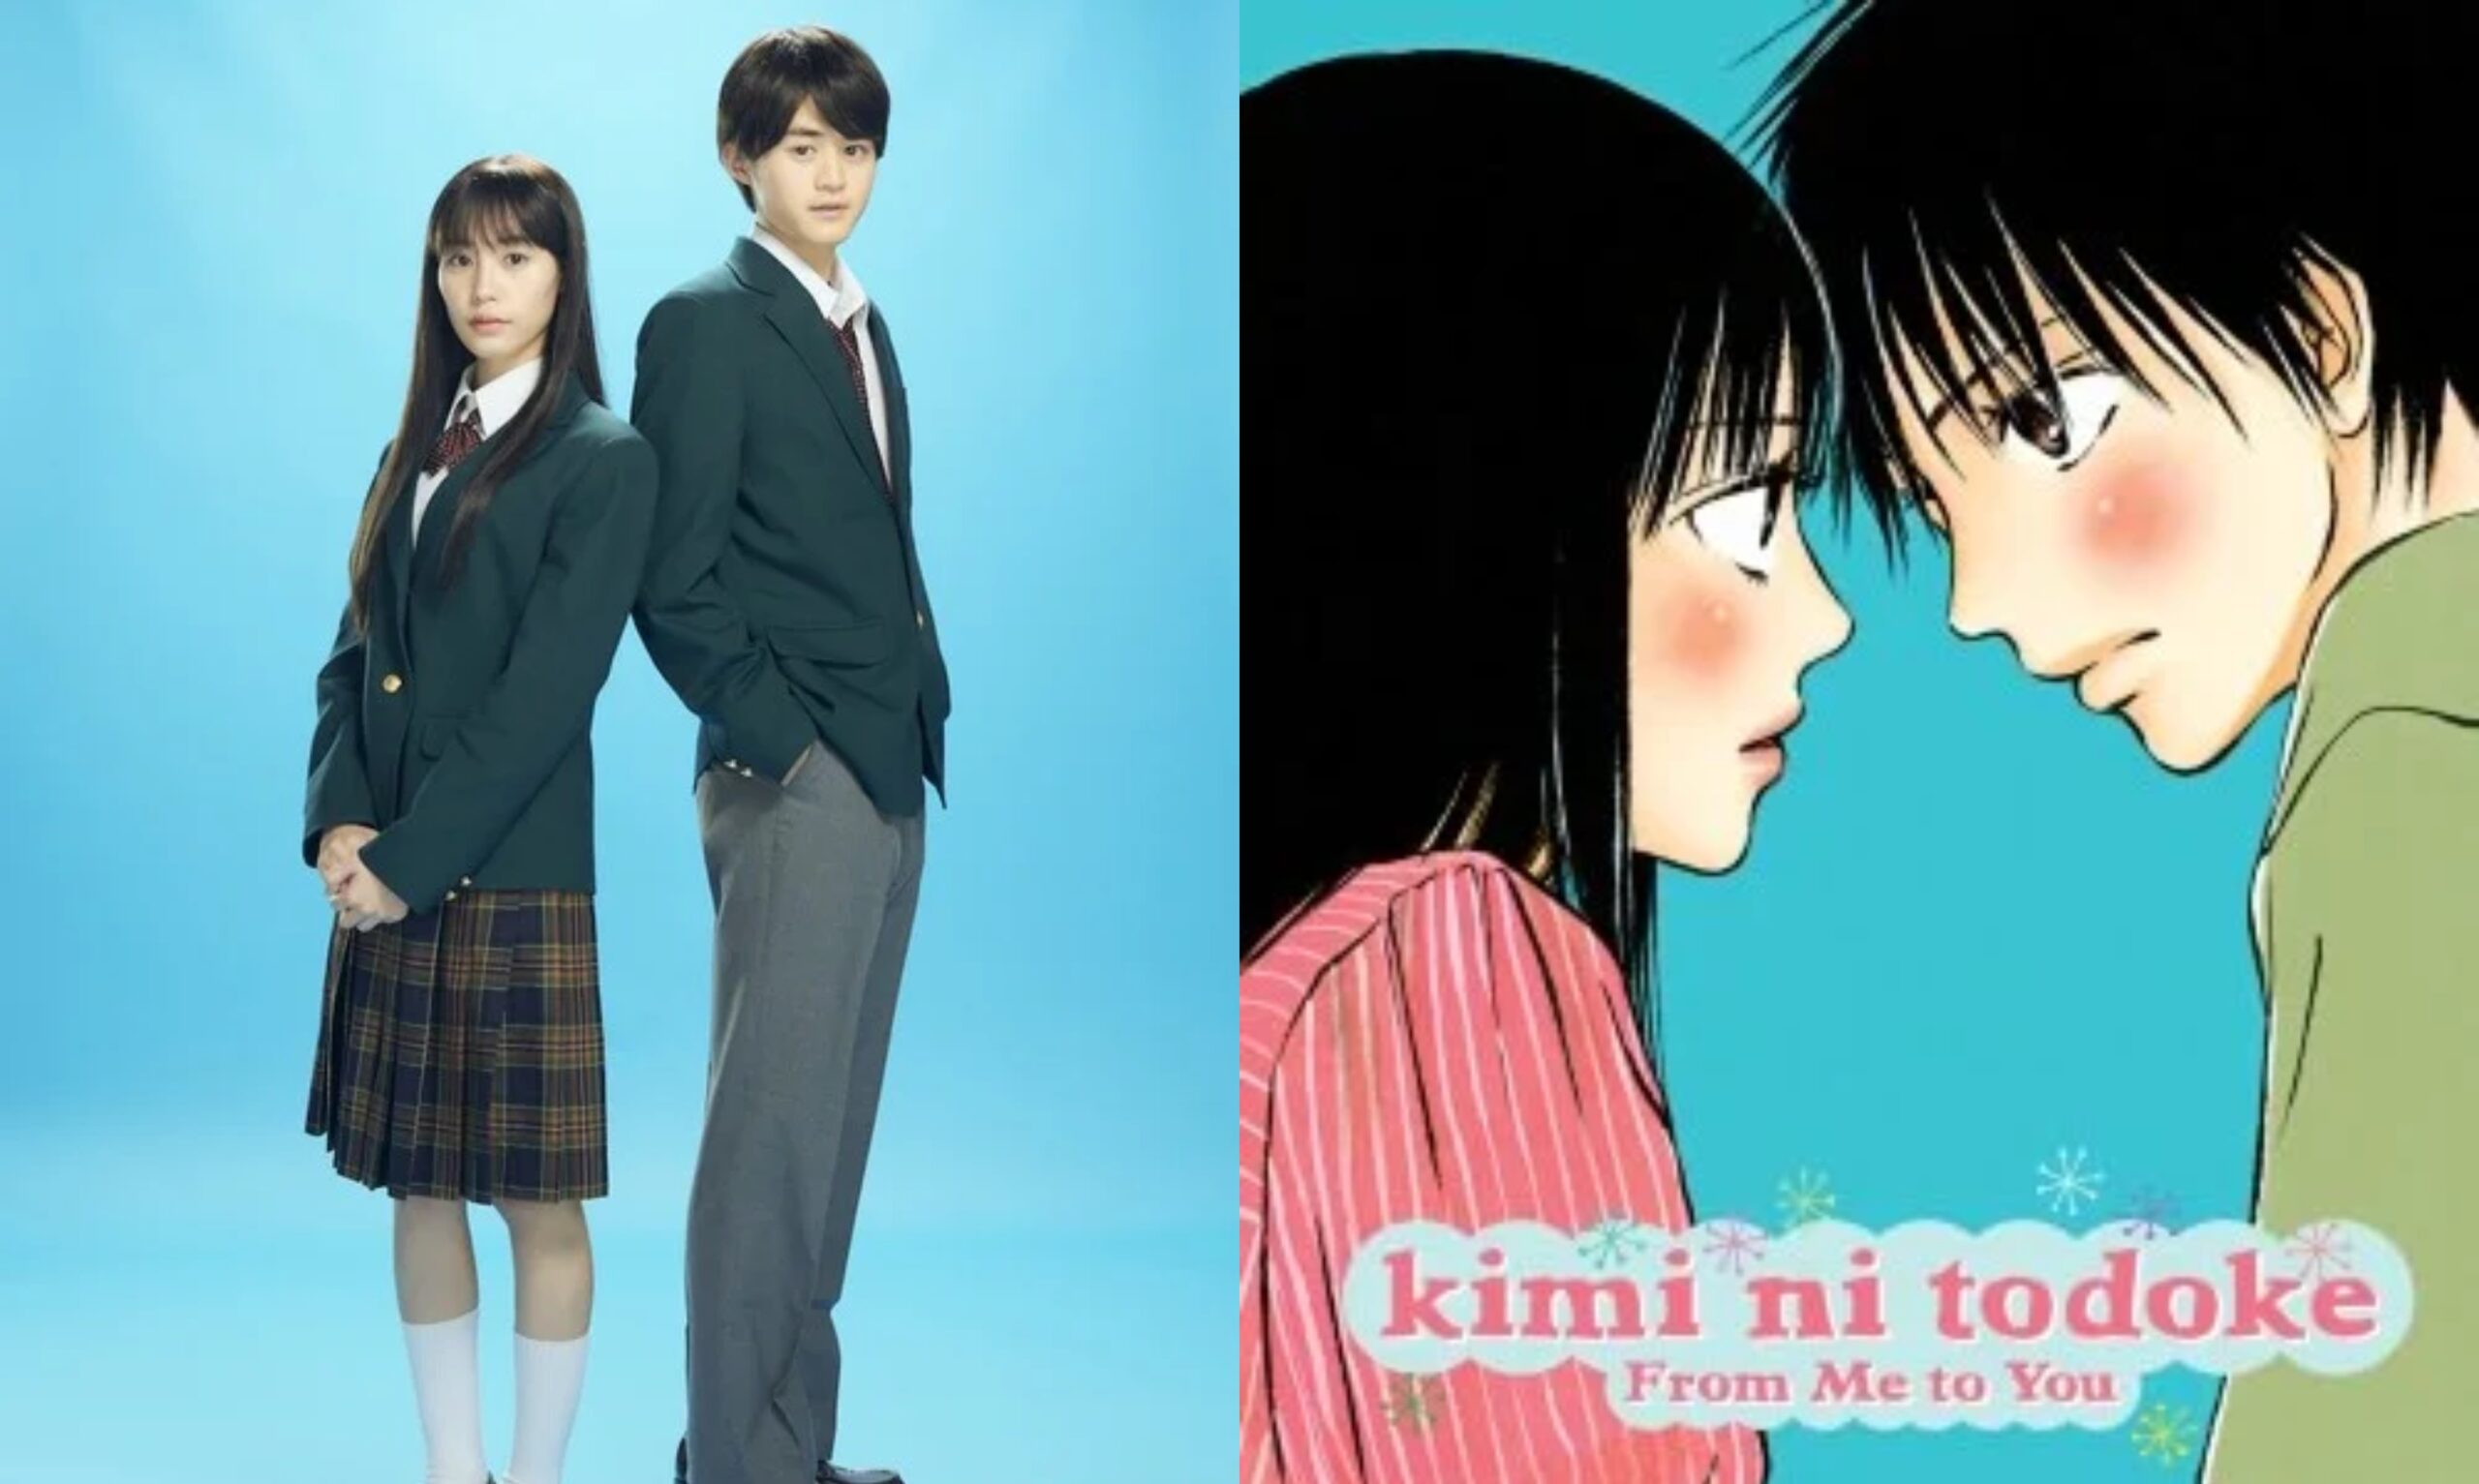 Popular Japanese Manga “Kimi Ni Todoke” Gets A Drama Adaptation On Netflix  | AlphaGirl Reviews